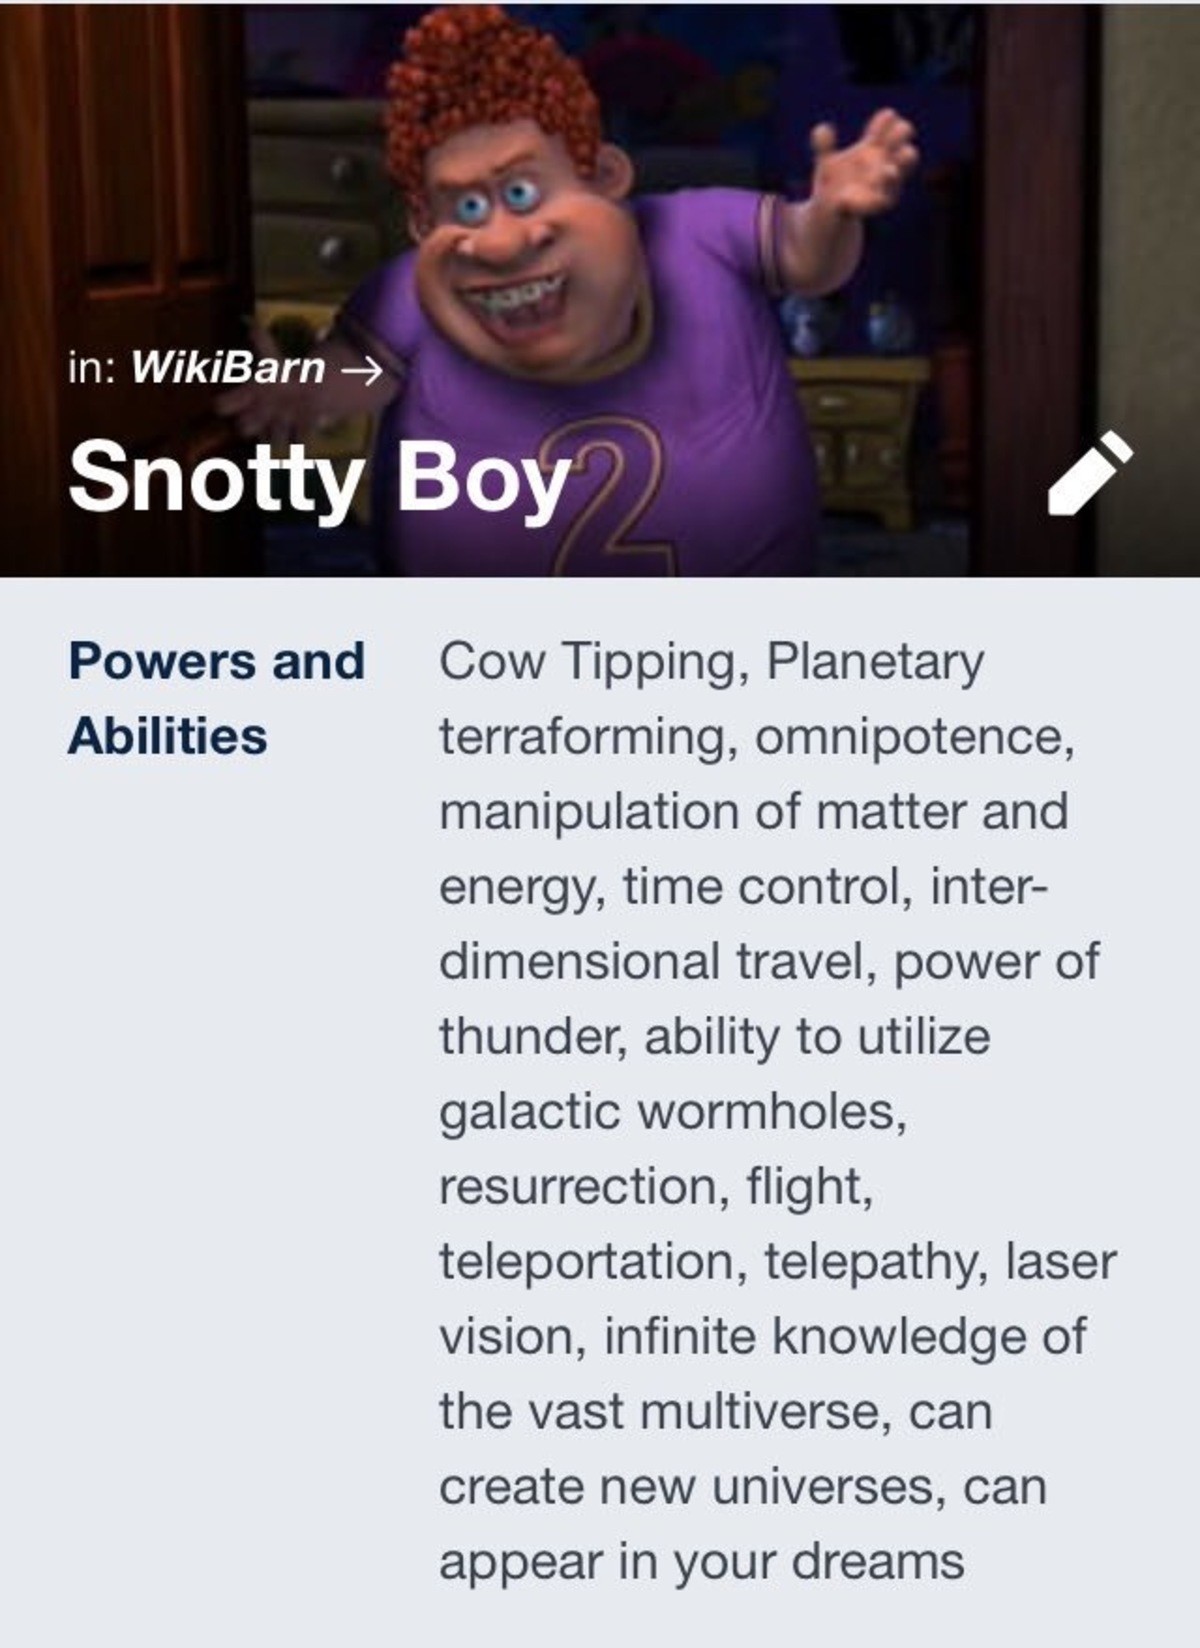 Snotty Boys Wiki Got Edited